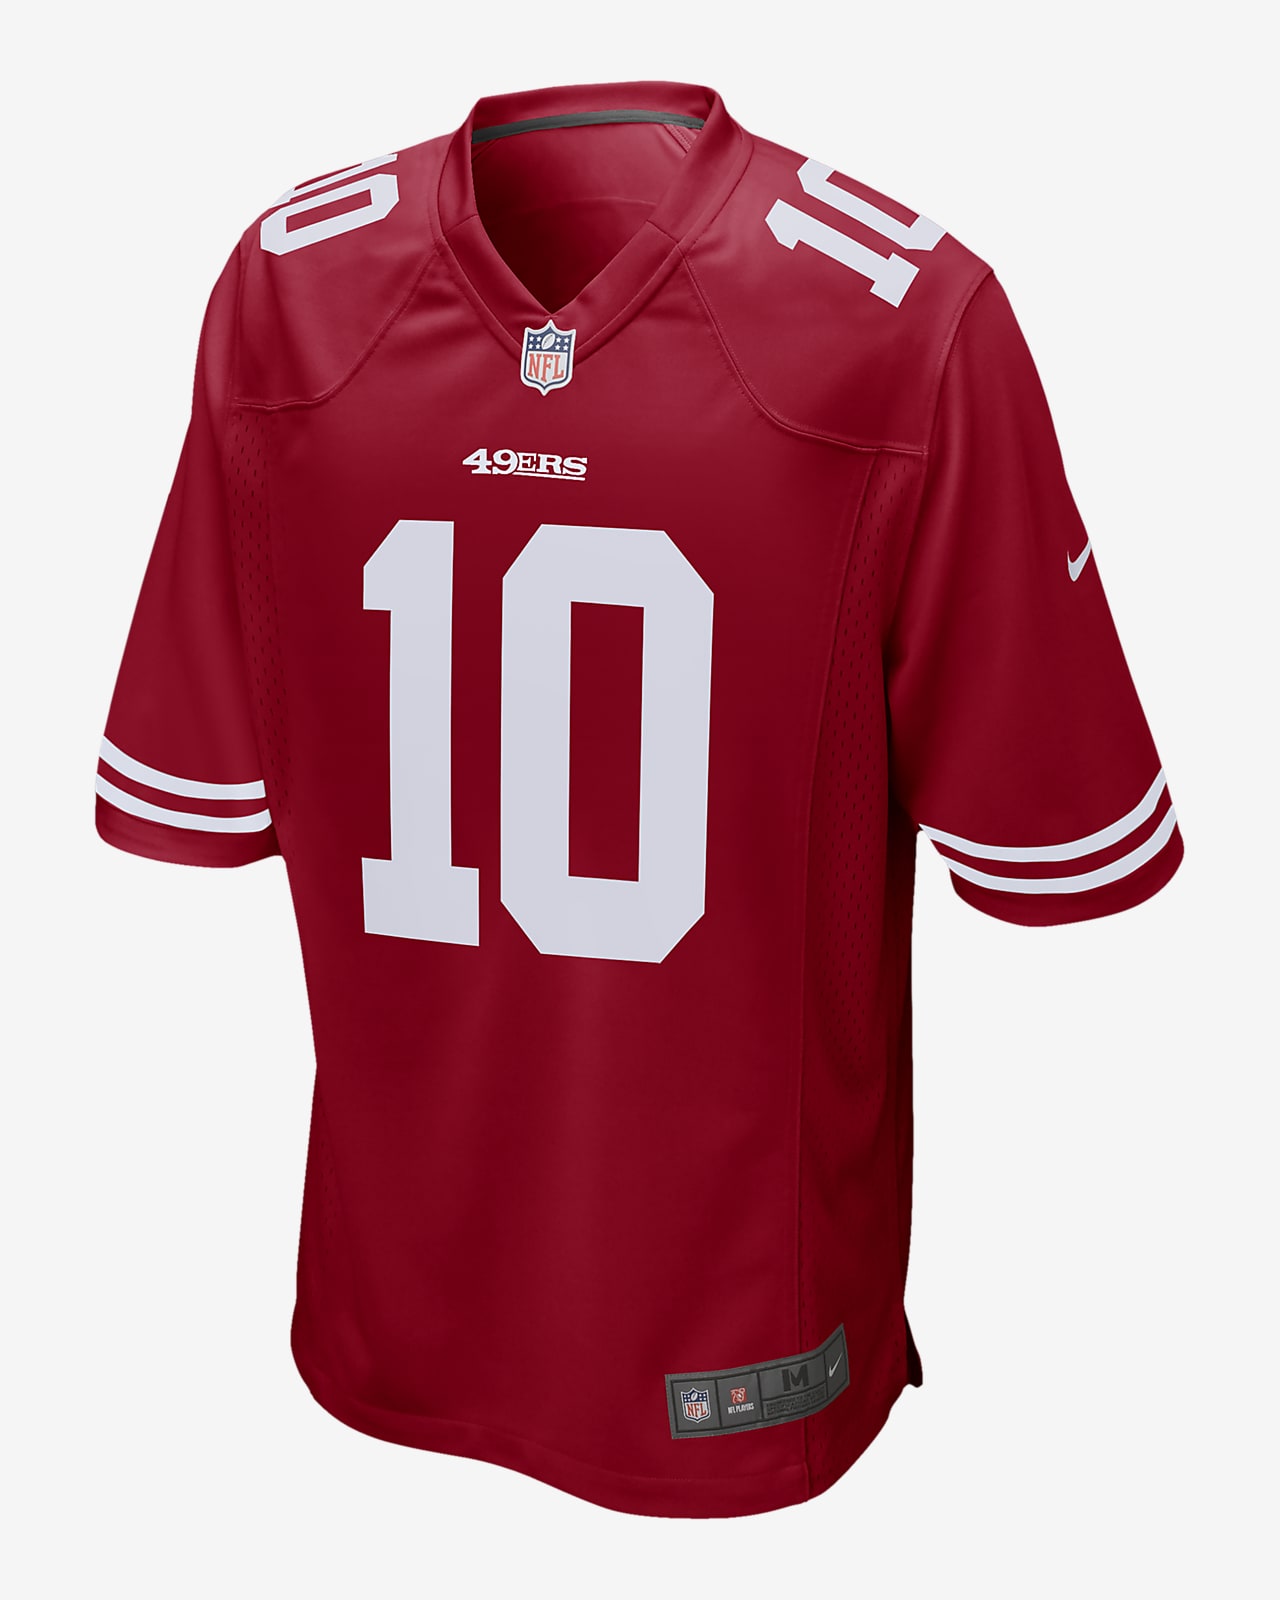 NFL San Francisco 49ers (Jimmy Garoppolo) American-Football-Trikot für Herren